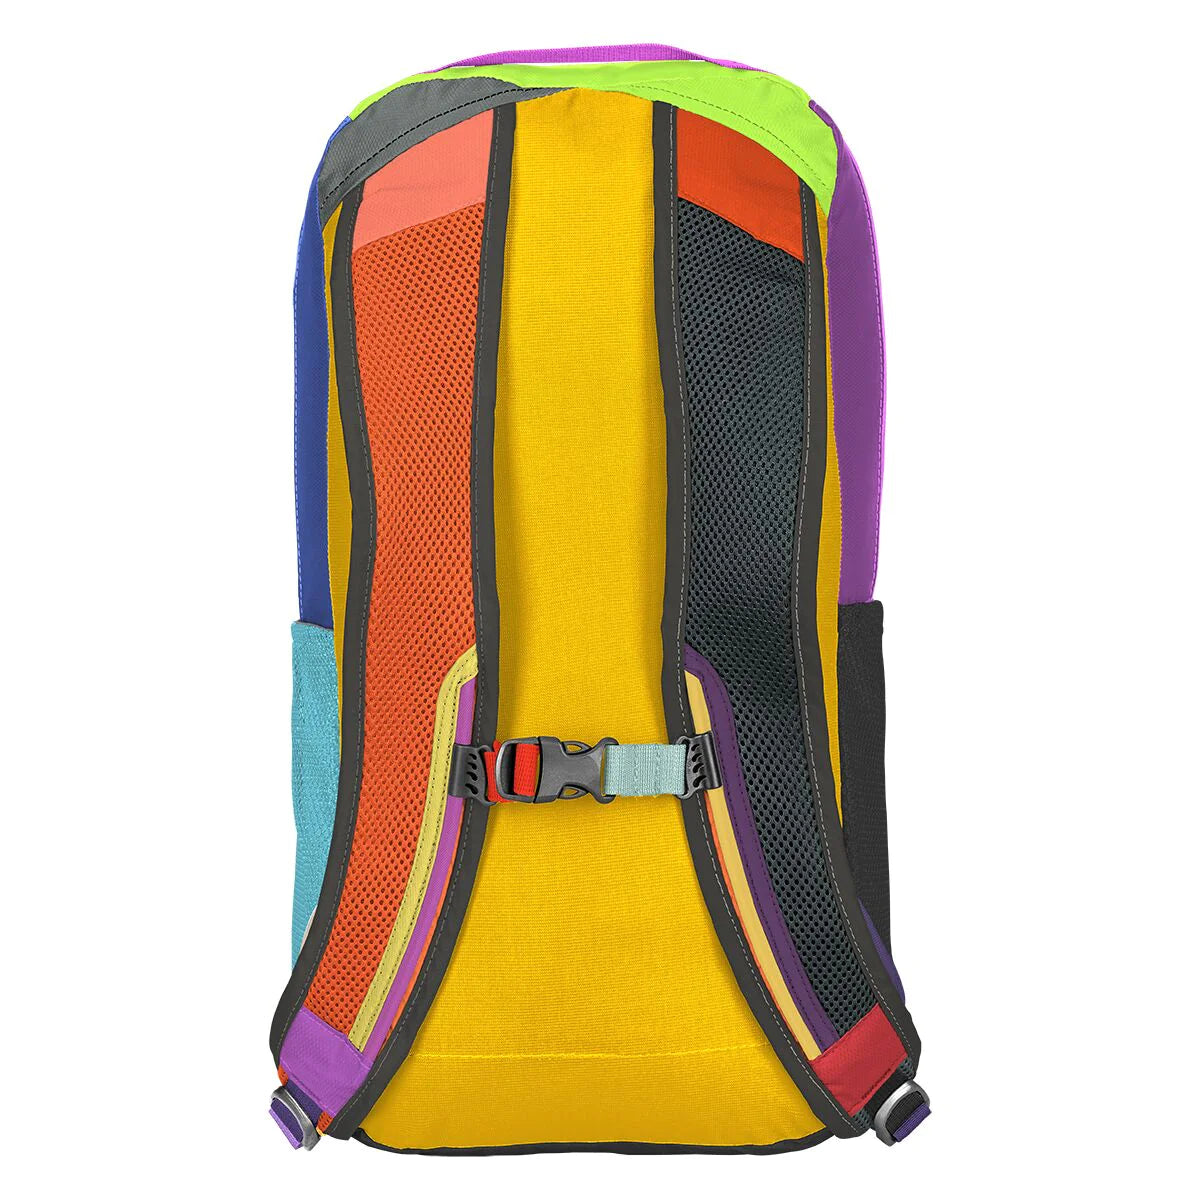 Cotopaxi Batac 16L Backpack - Del Día